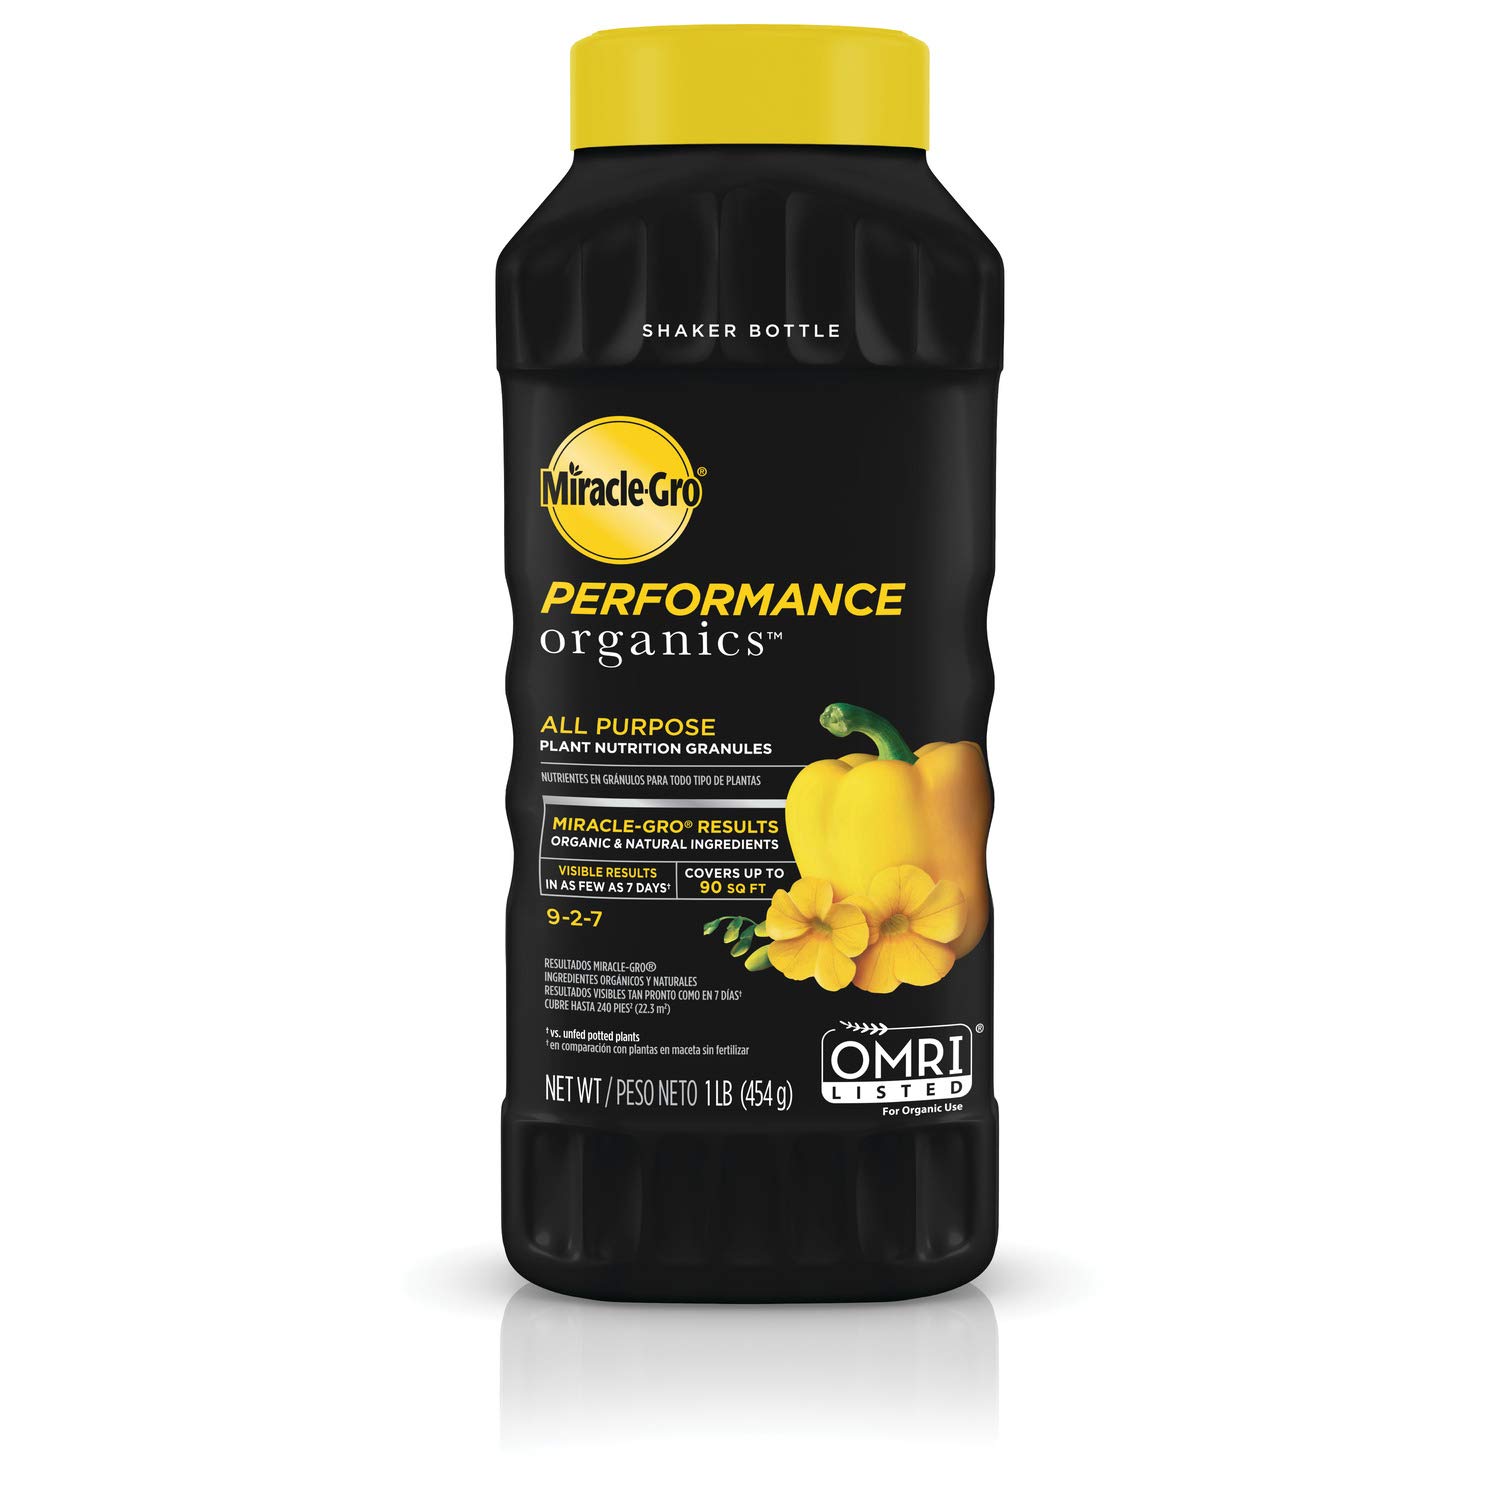 Miracle-Gro Performance Organics All Purpose Plant Nutrition Granules